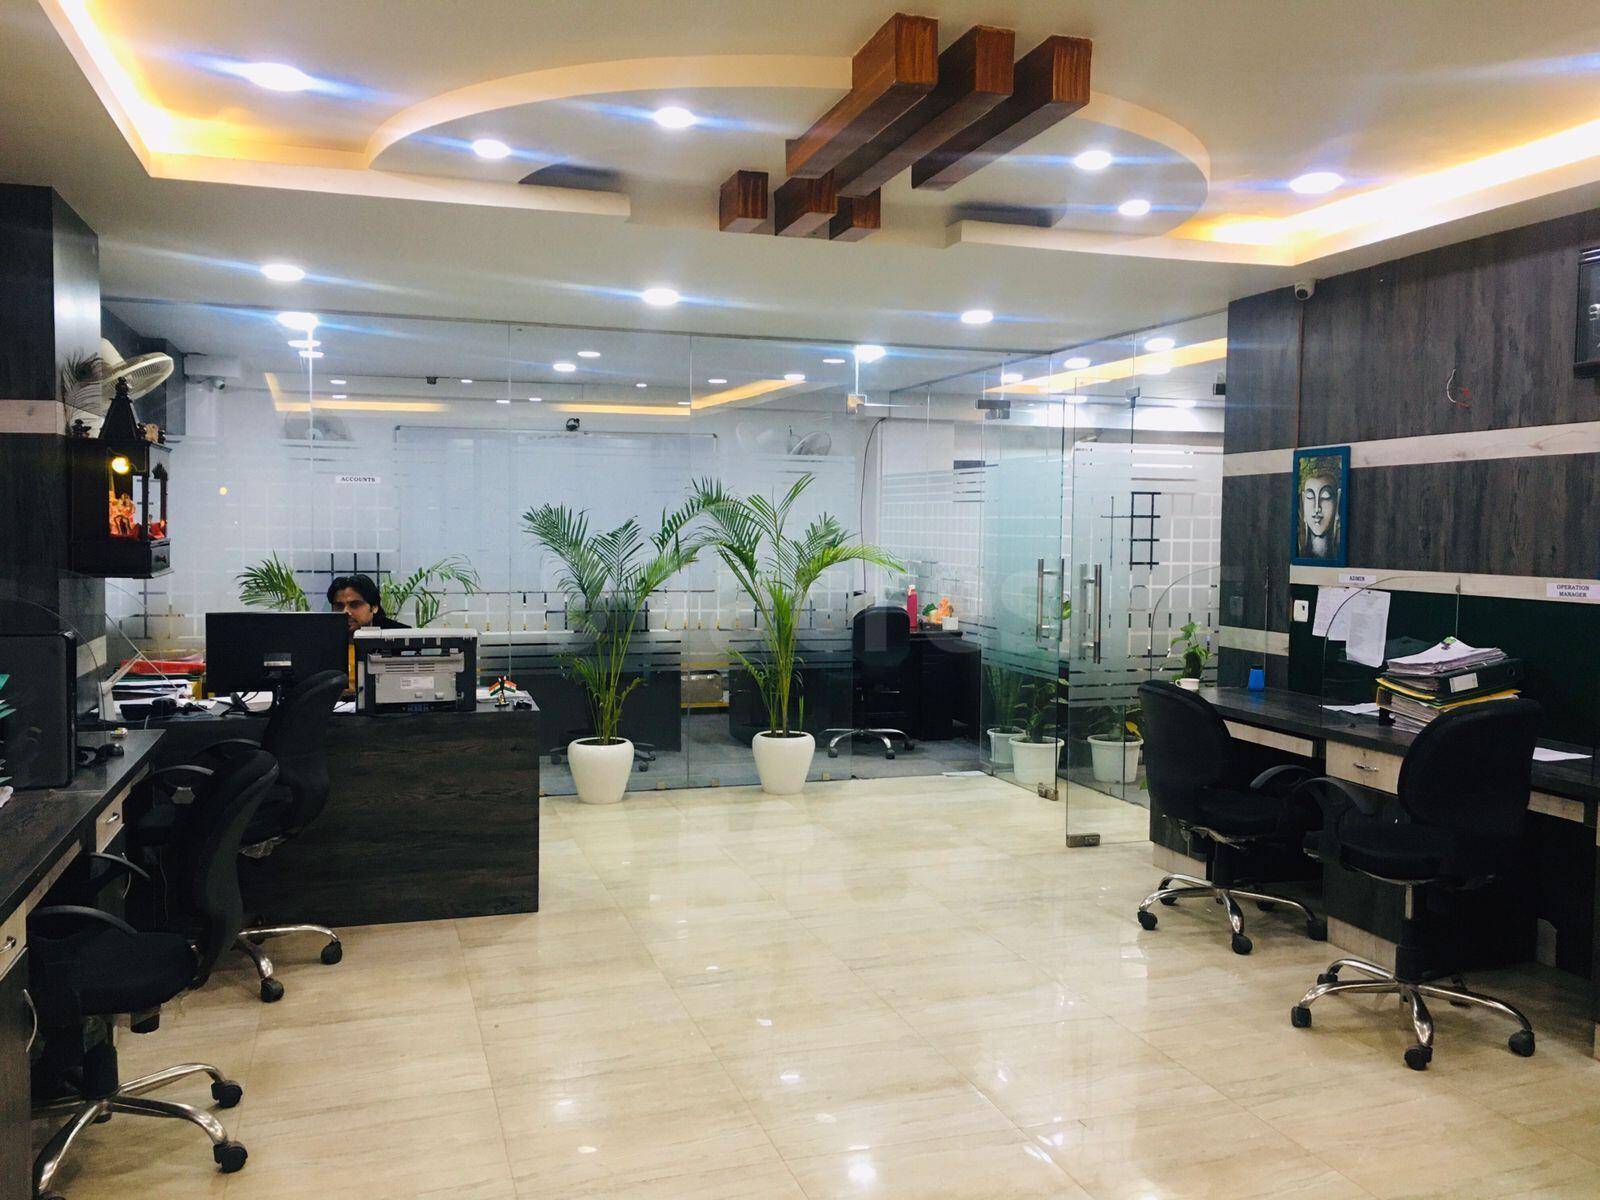 Rent Office/ Shop, 1600 sq ft carpet area, Furnished for rent @sector 49 noida